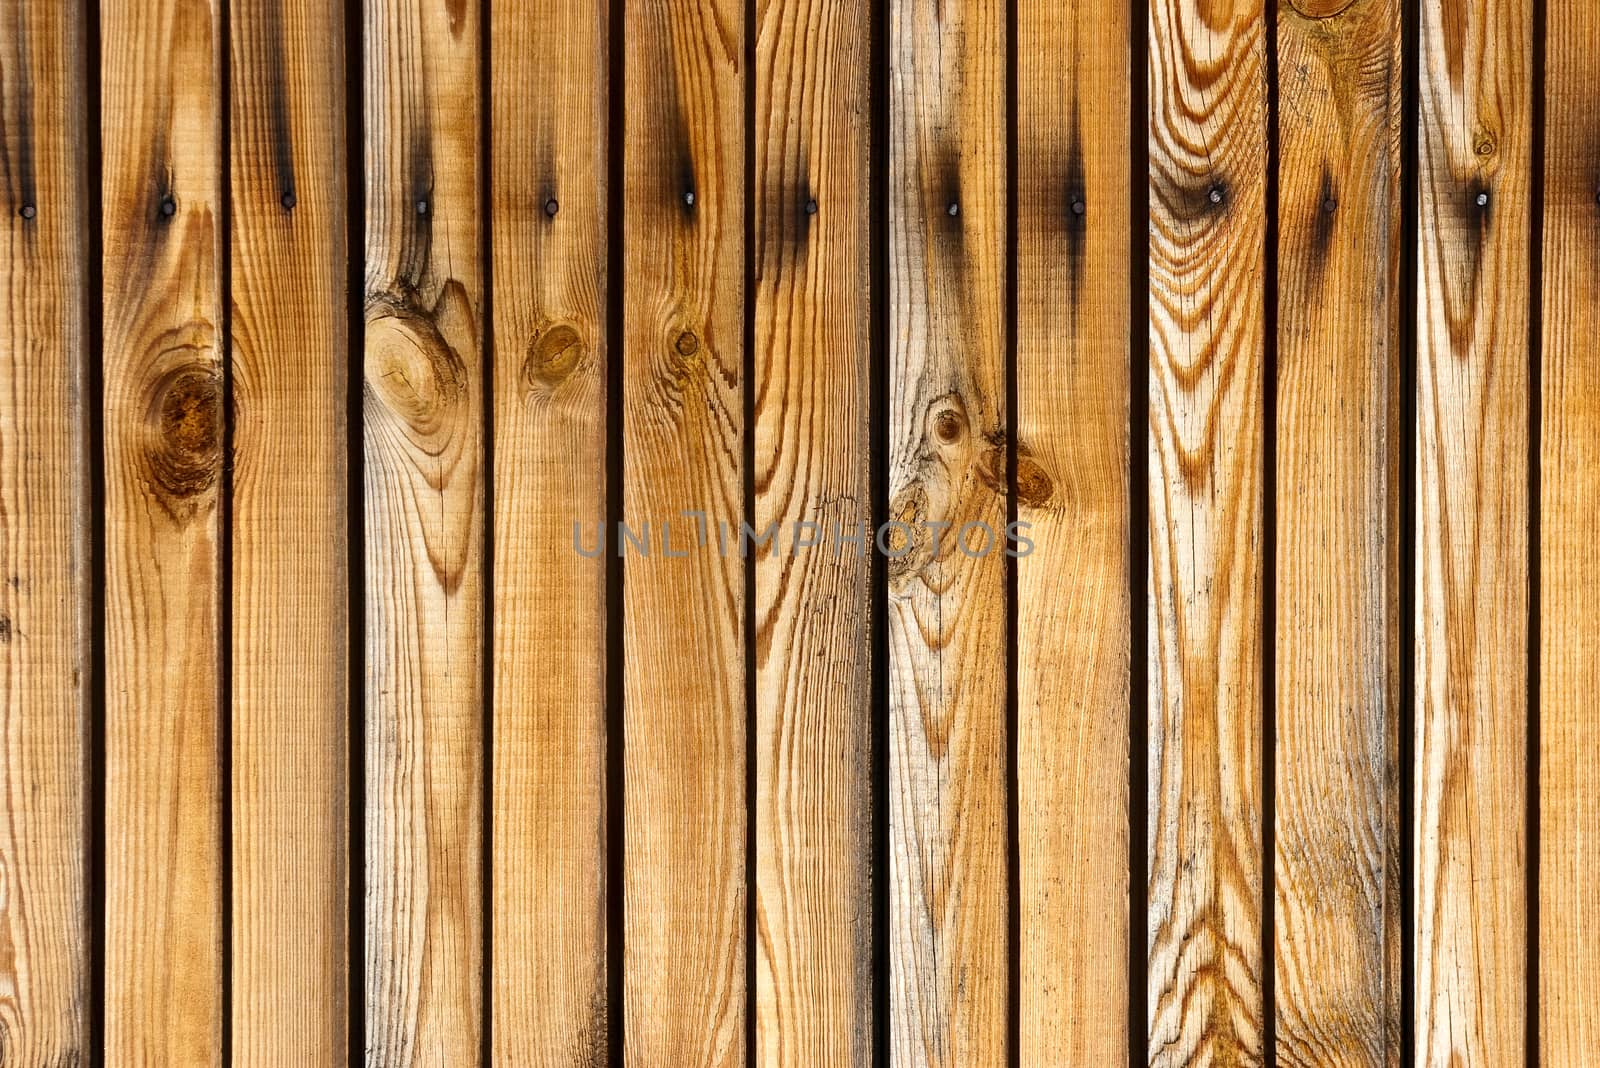 Dark Wood Texture Background by H2Oshka